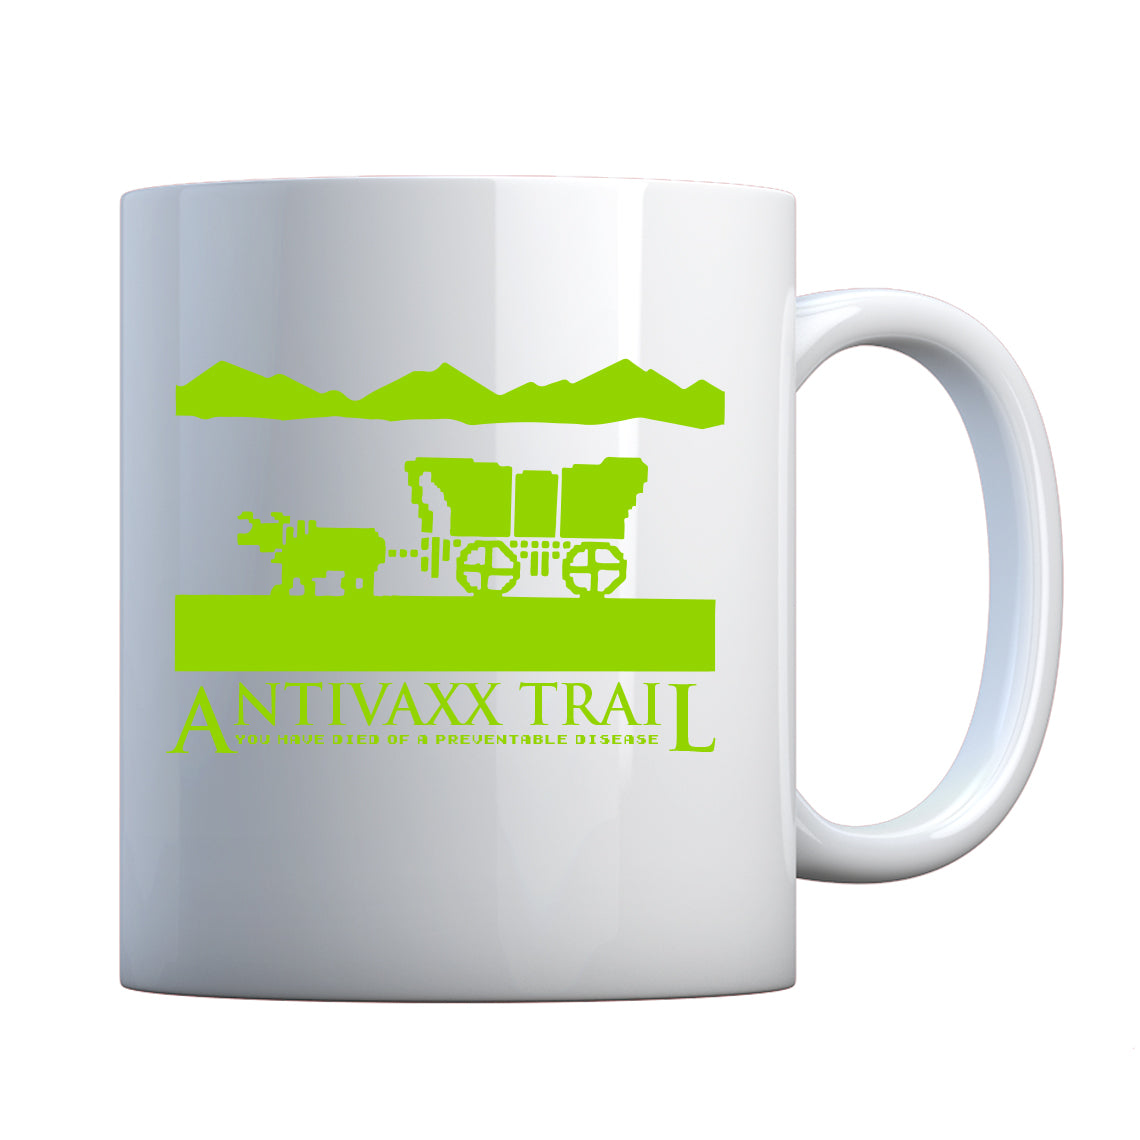 Antivaxx Trail Ceramic Gift Mug